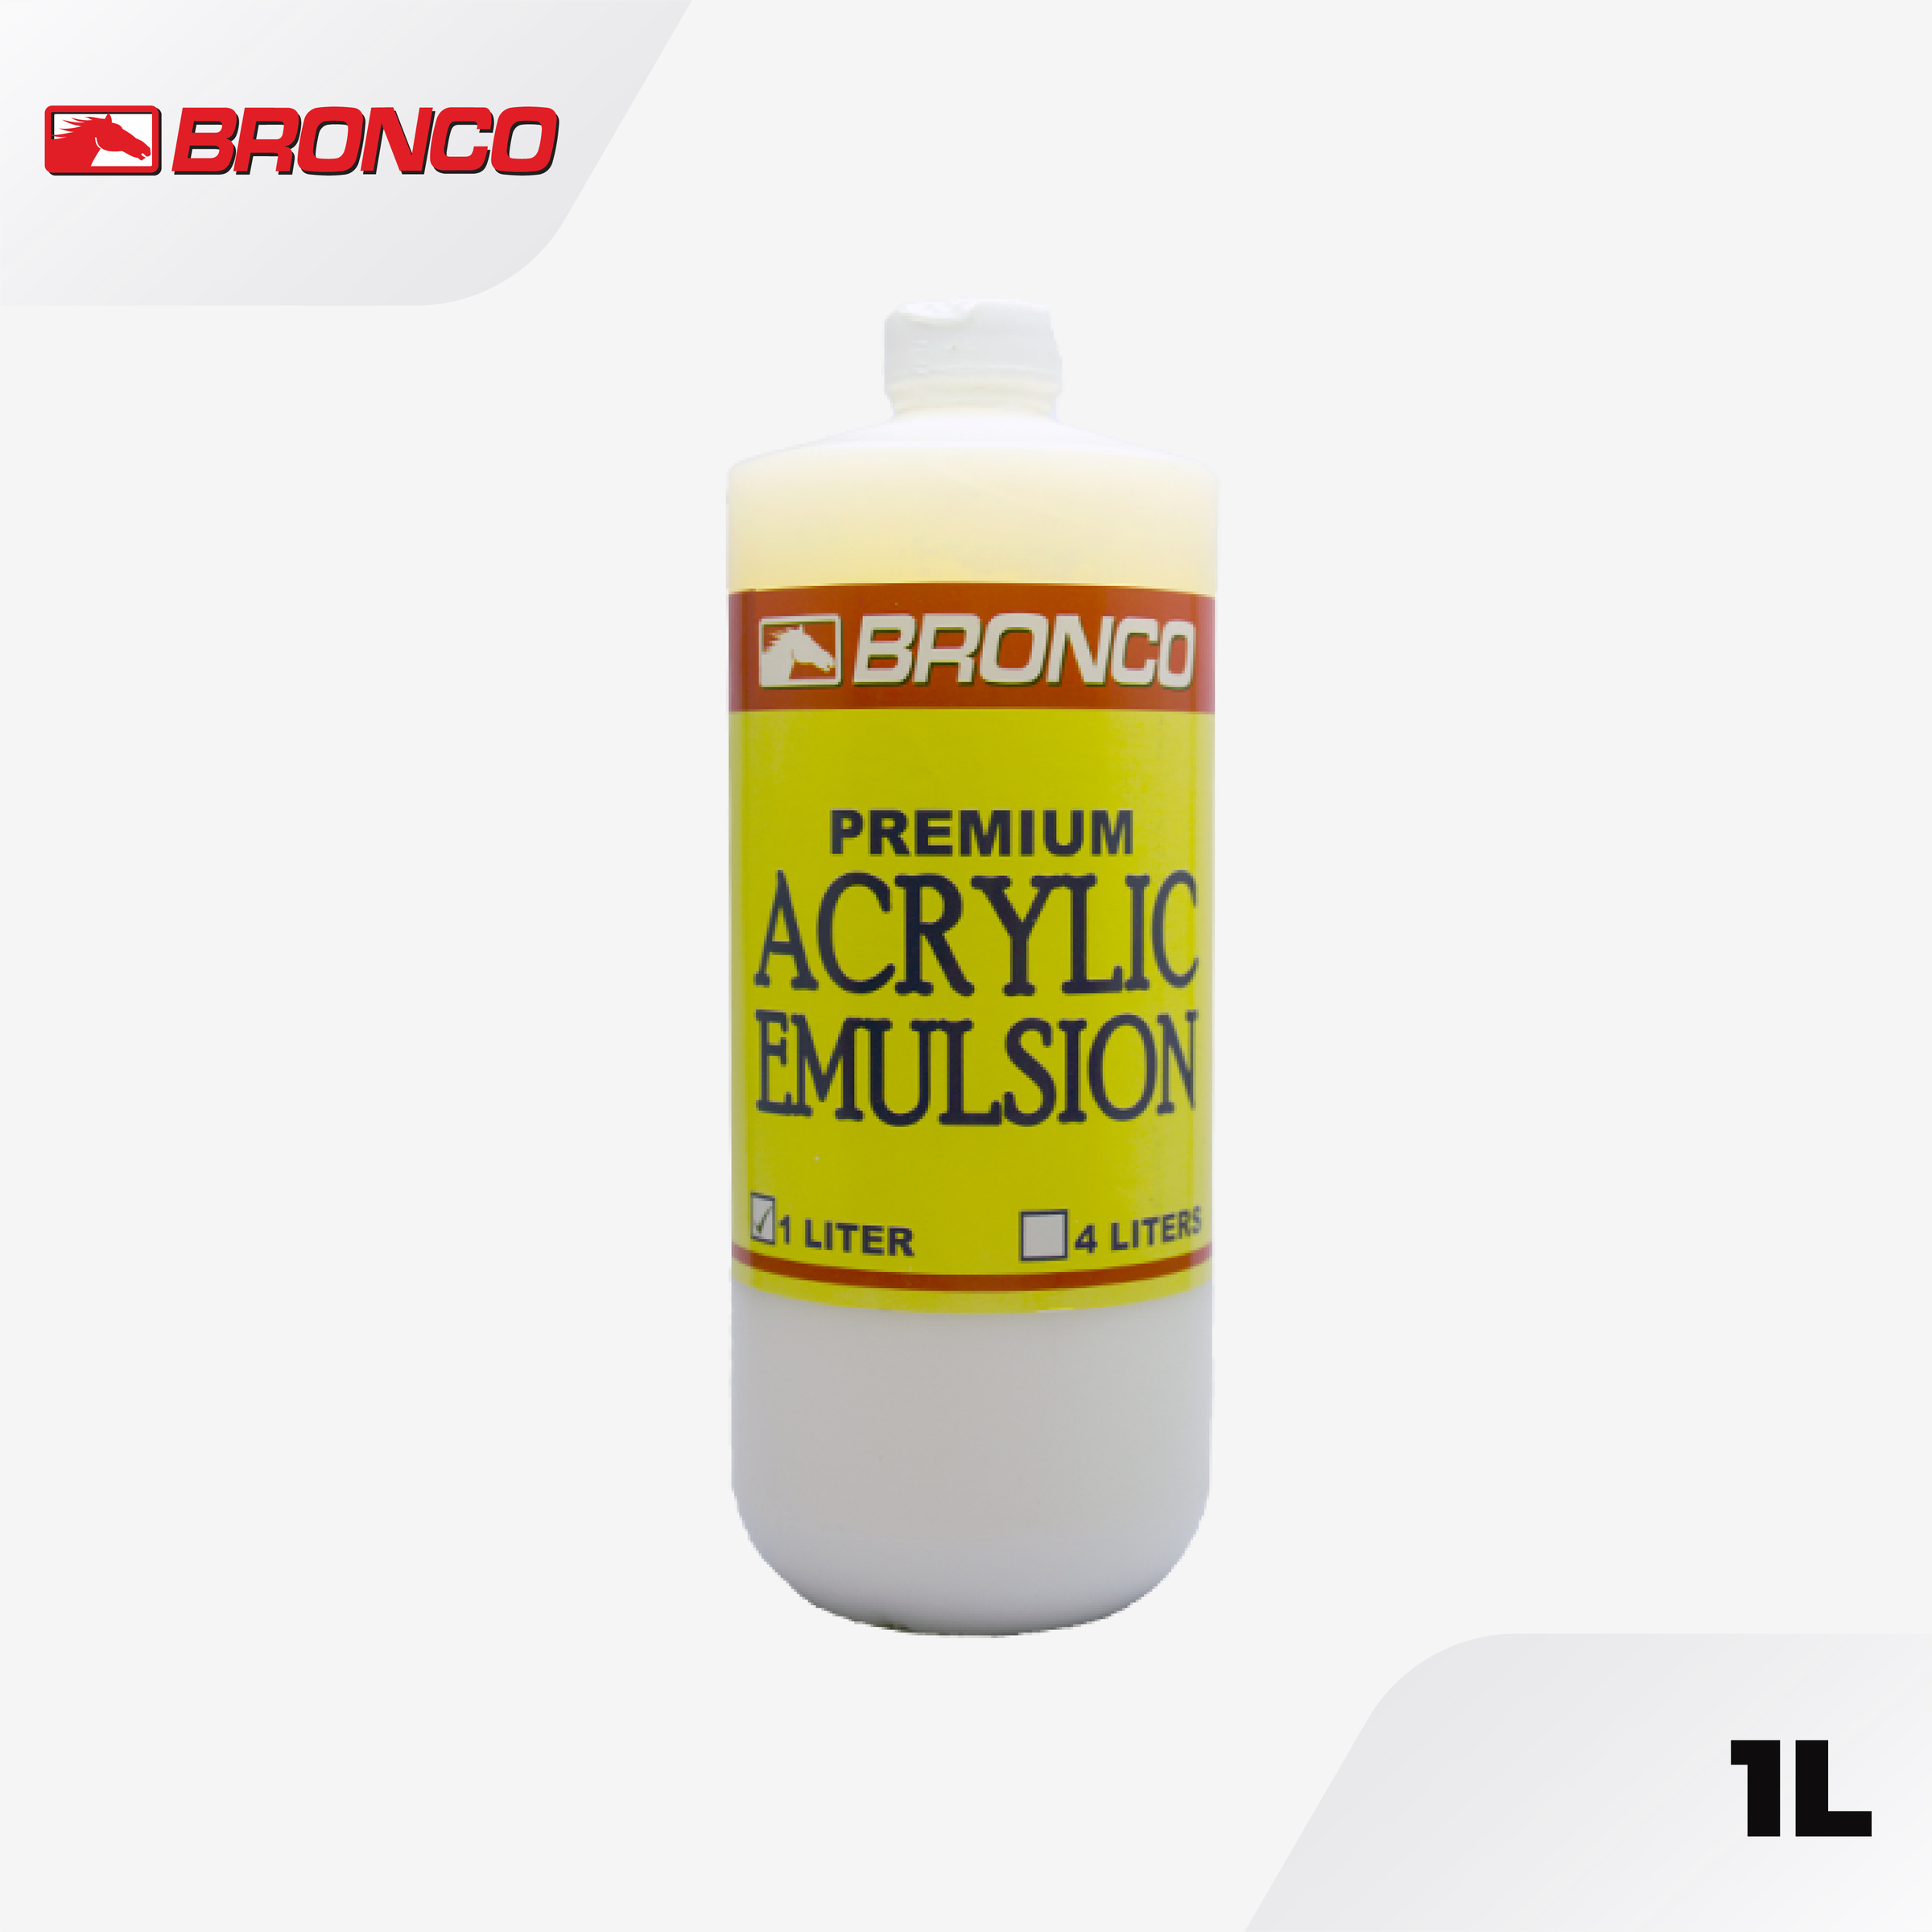 Bronco Acrylic Emulsion - 1L